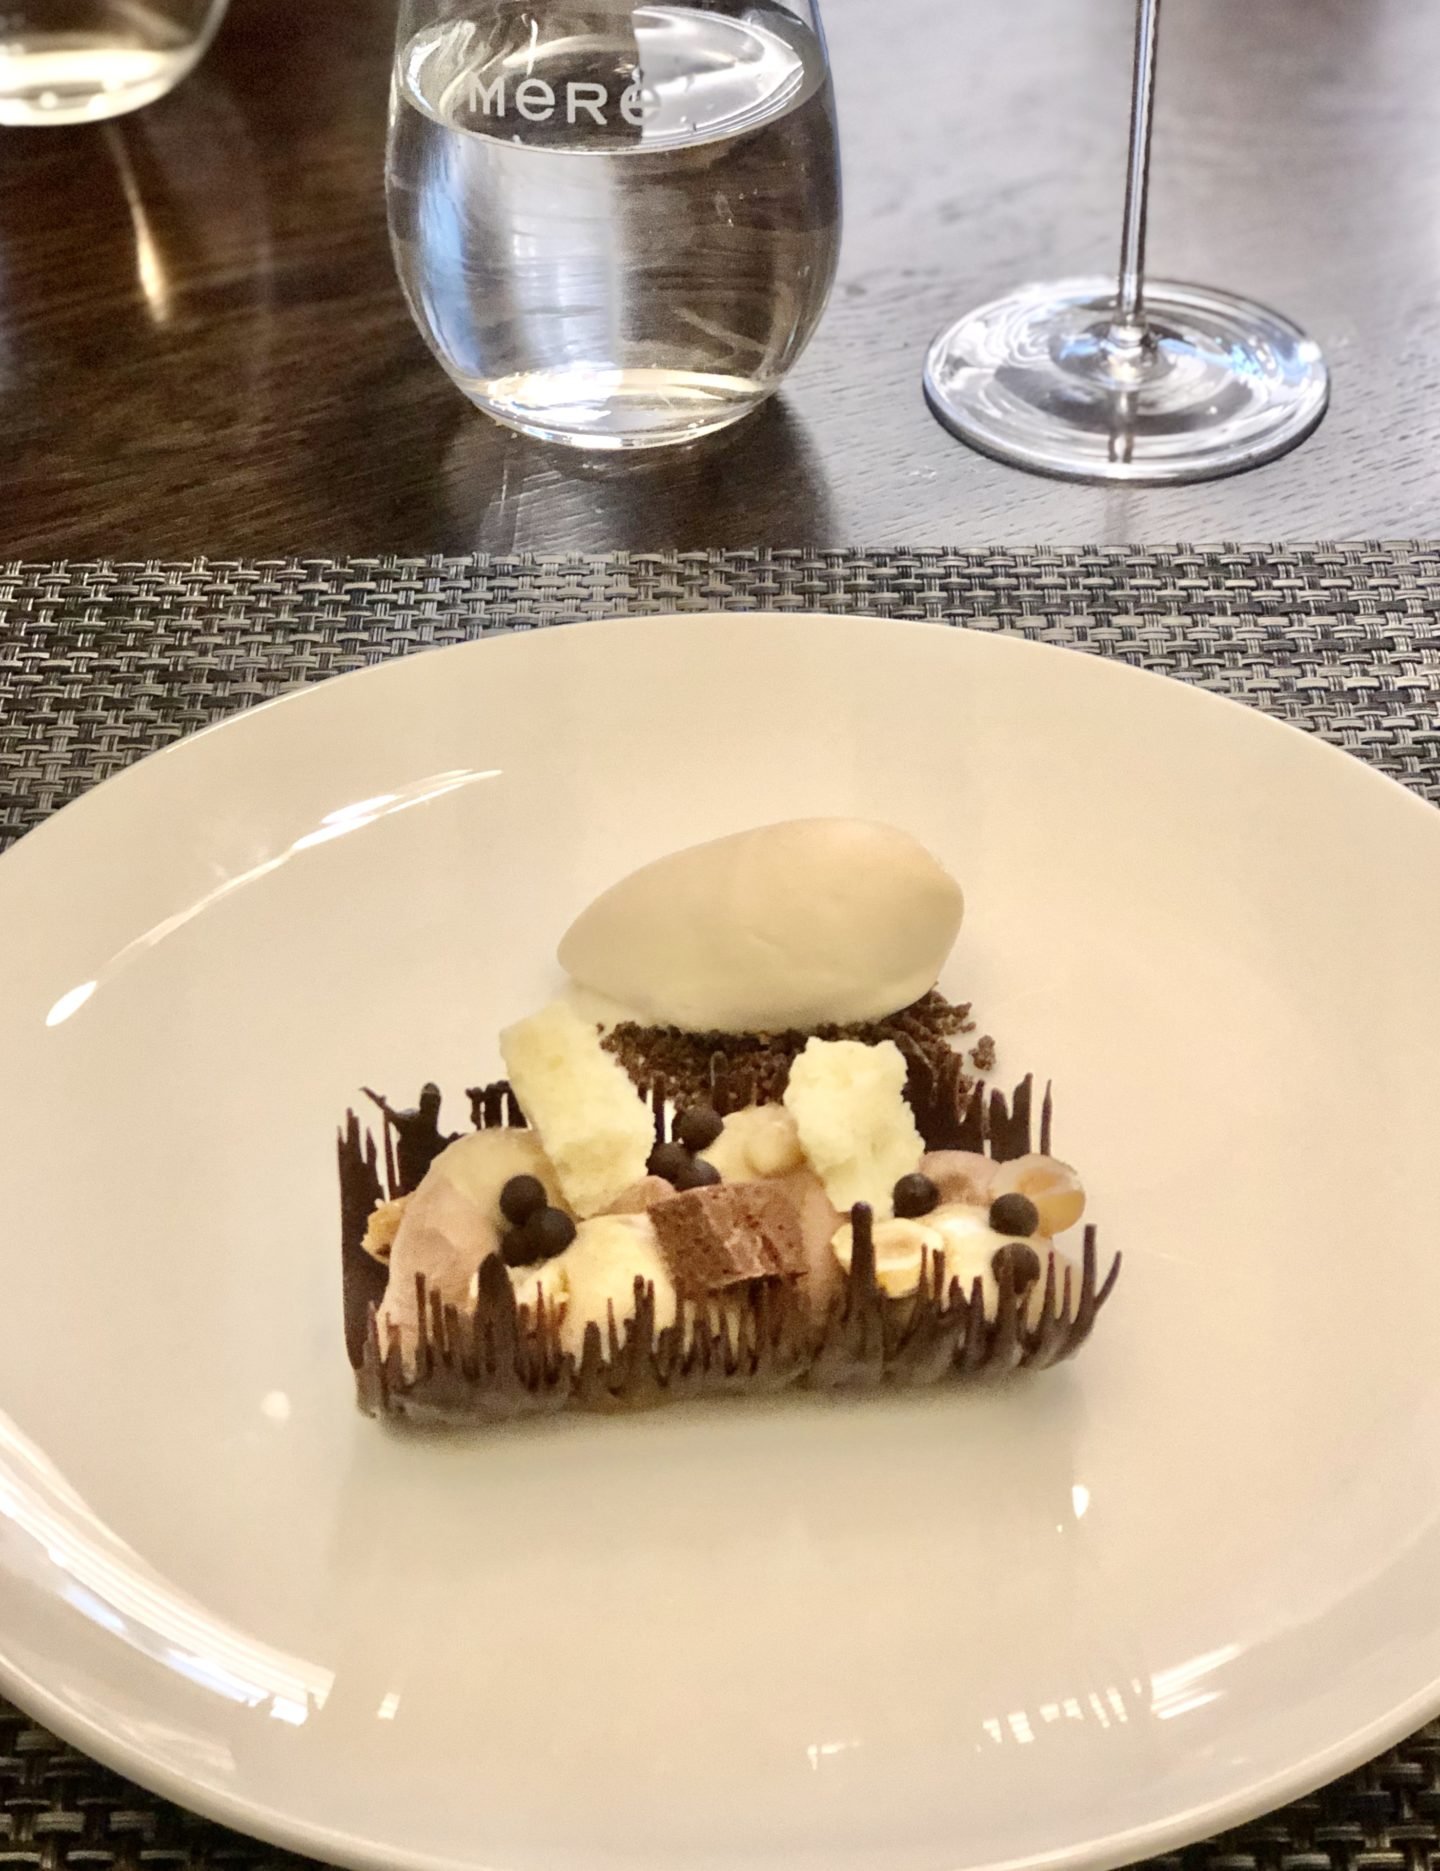 Chocolate and Hazelnut dessert at the Mere